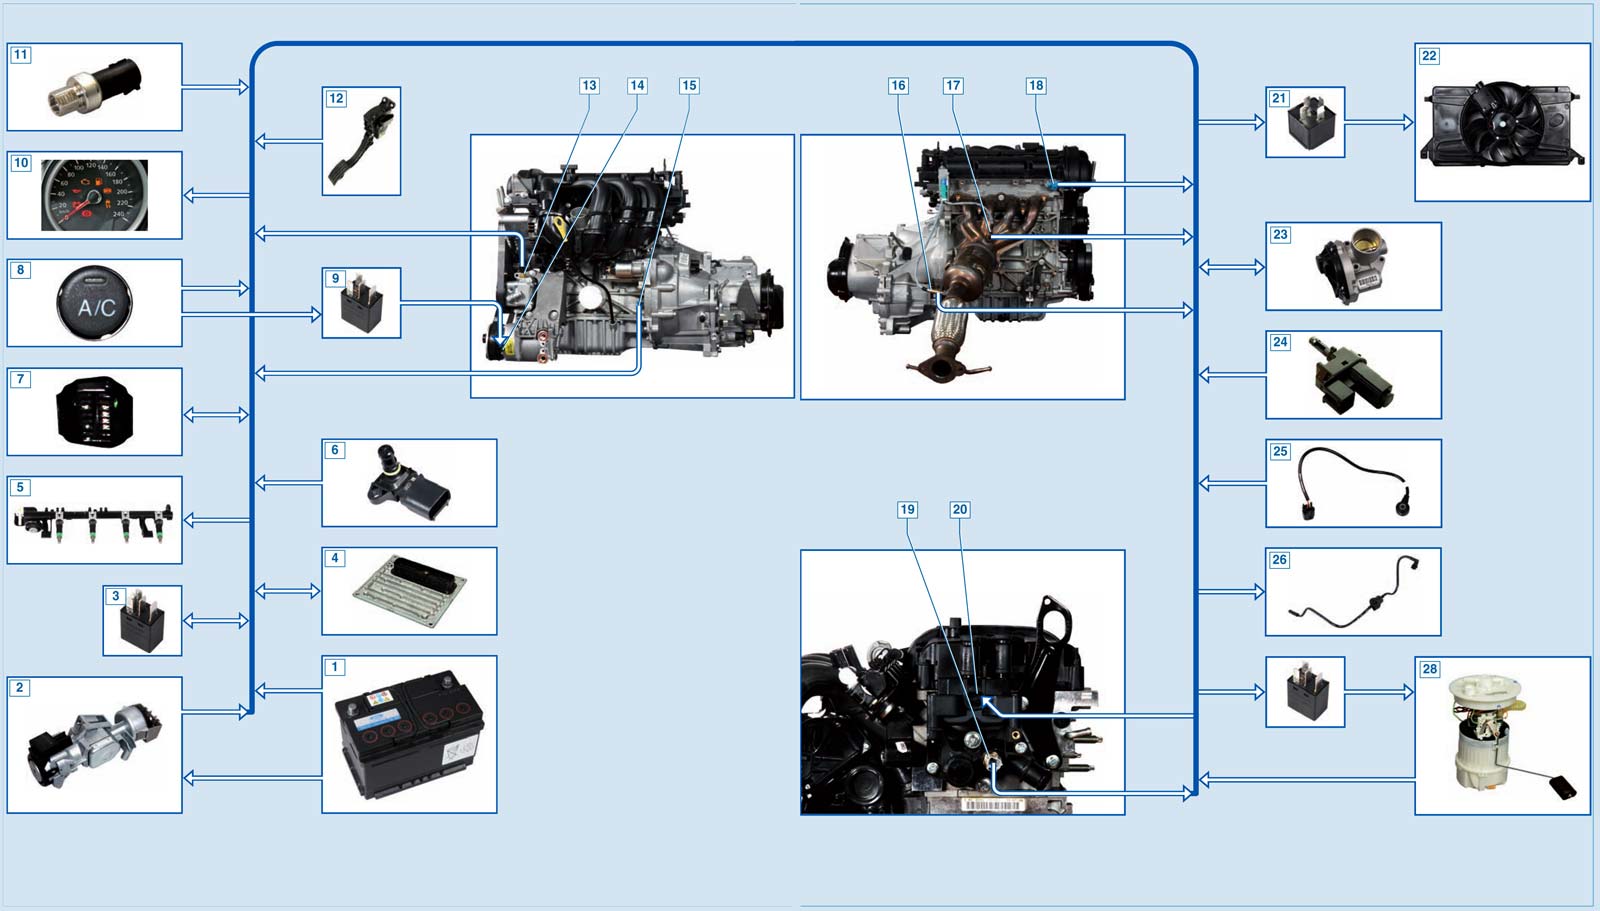 Ford Focus II. Описание конструкции системы управления двигателями 1,4Duratec, 1,6Duratec и 1,6Duratec Ti-VCT